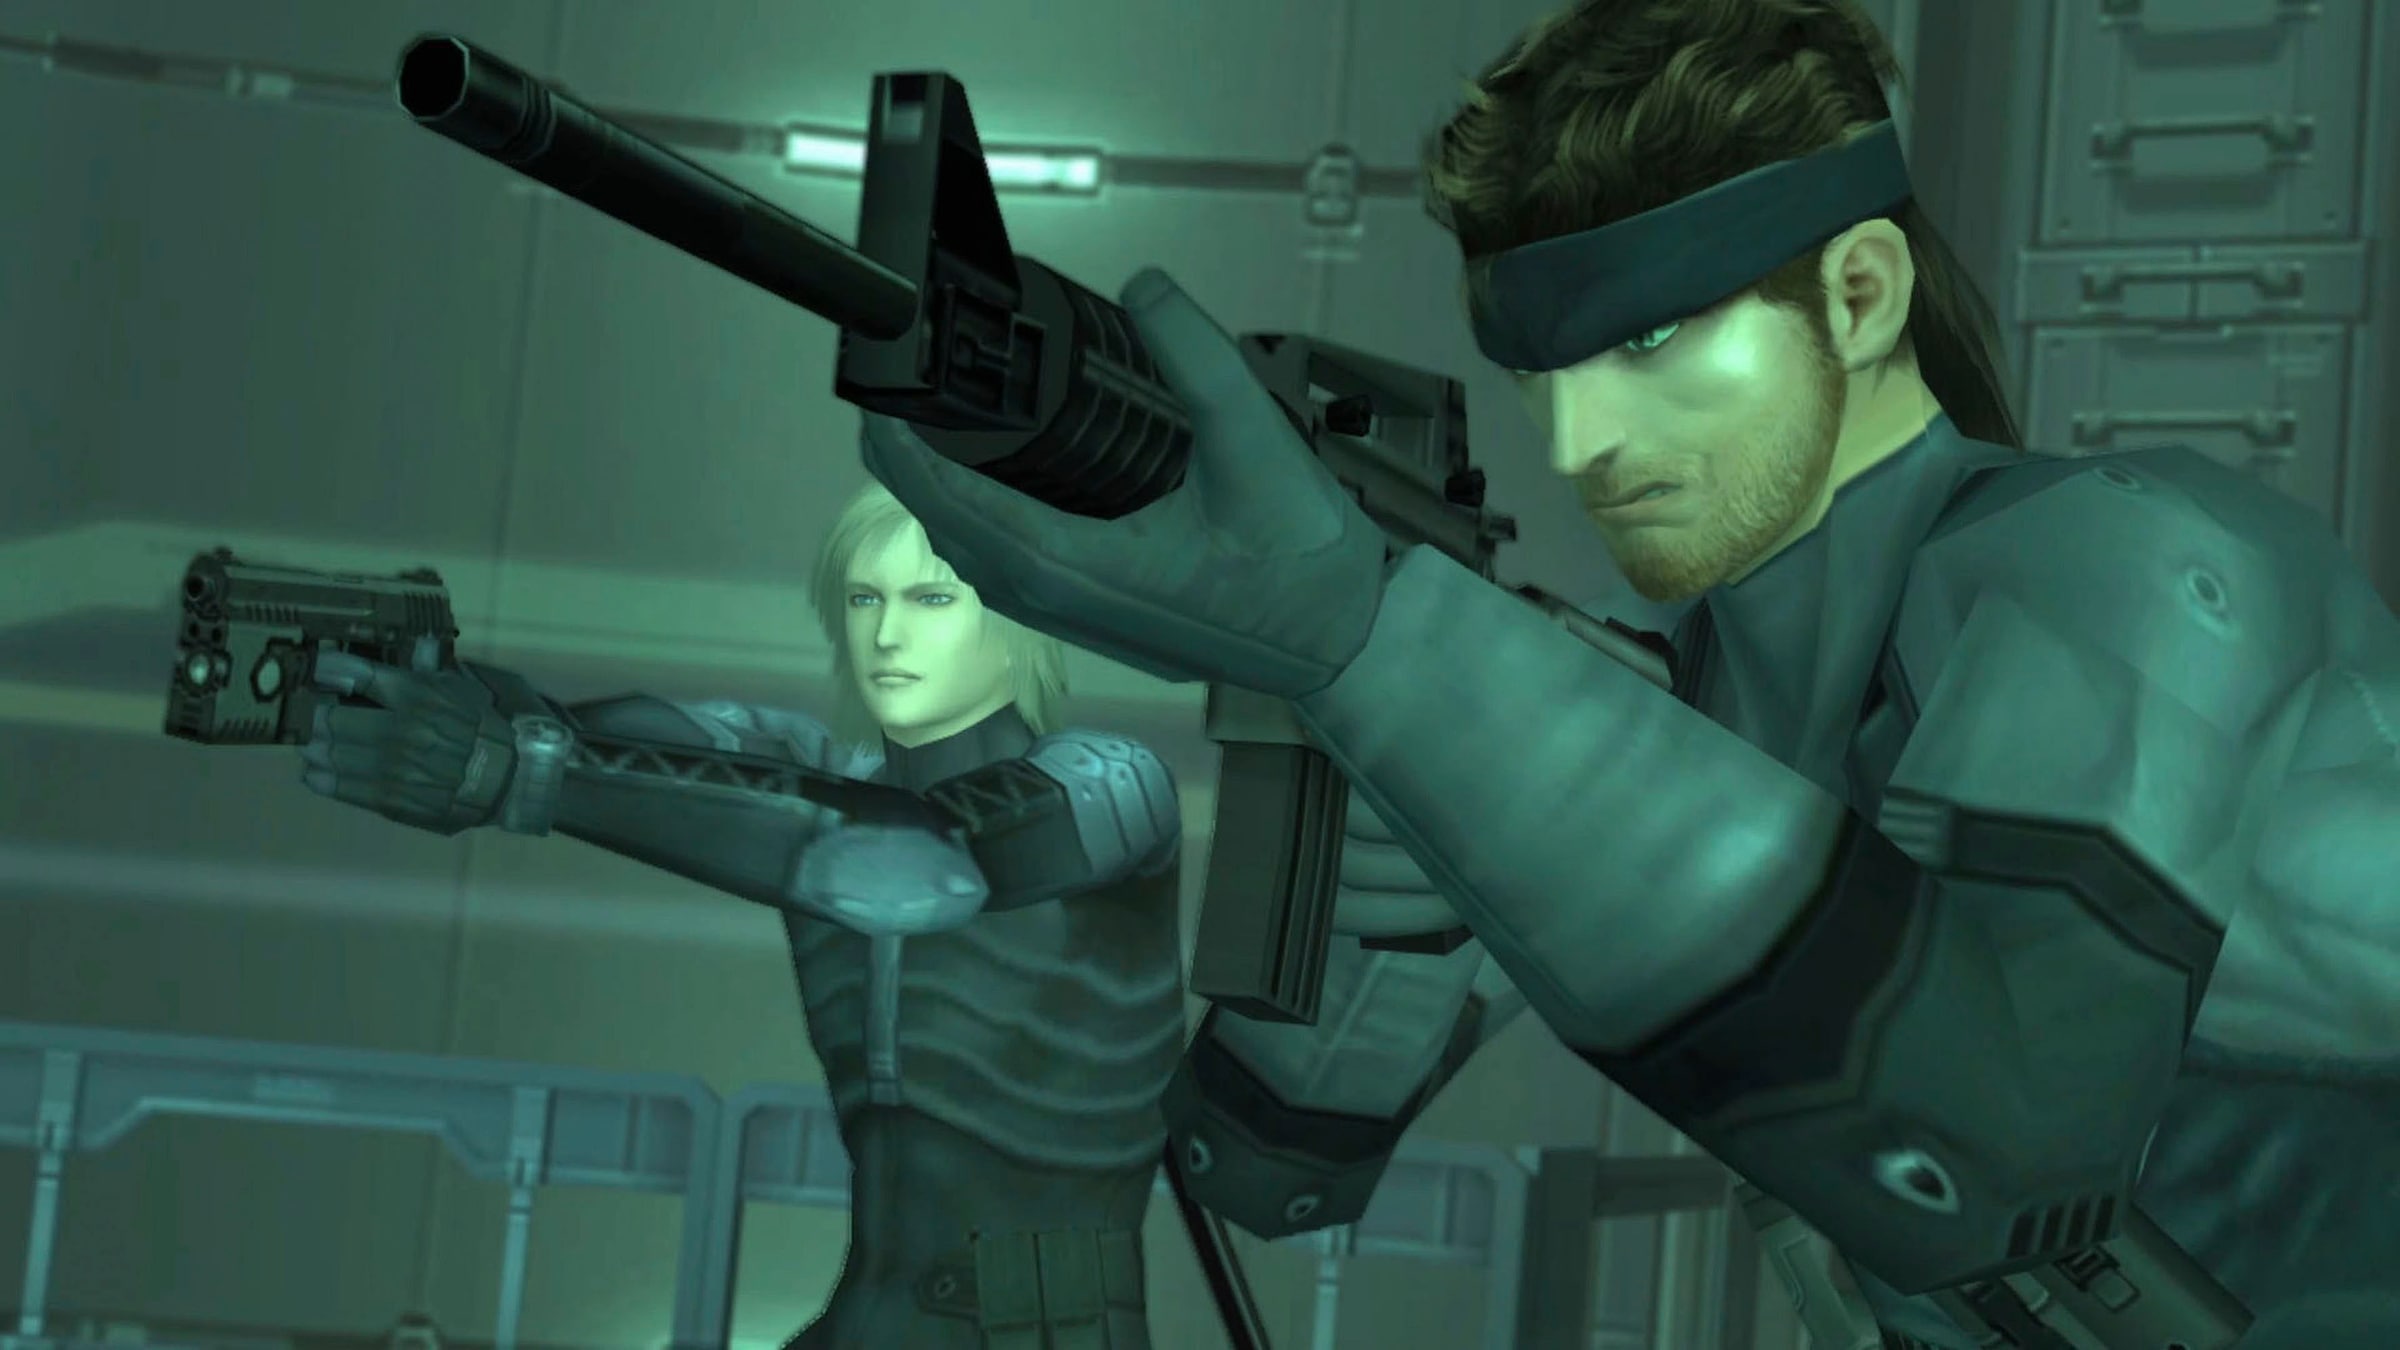 Konami Spielesoftware »Metal Gear Solid Master Collection Vol. 1«, Xbox Series X